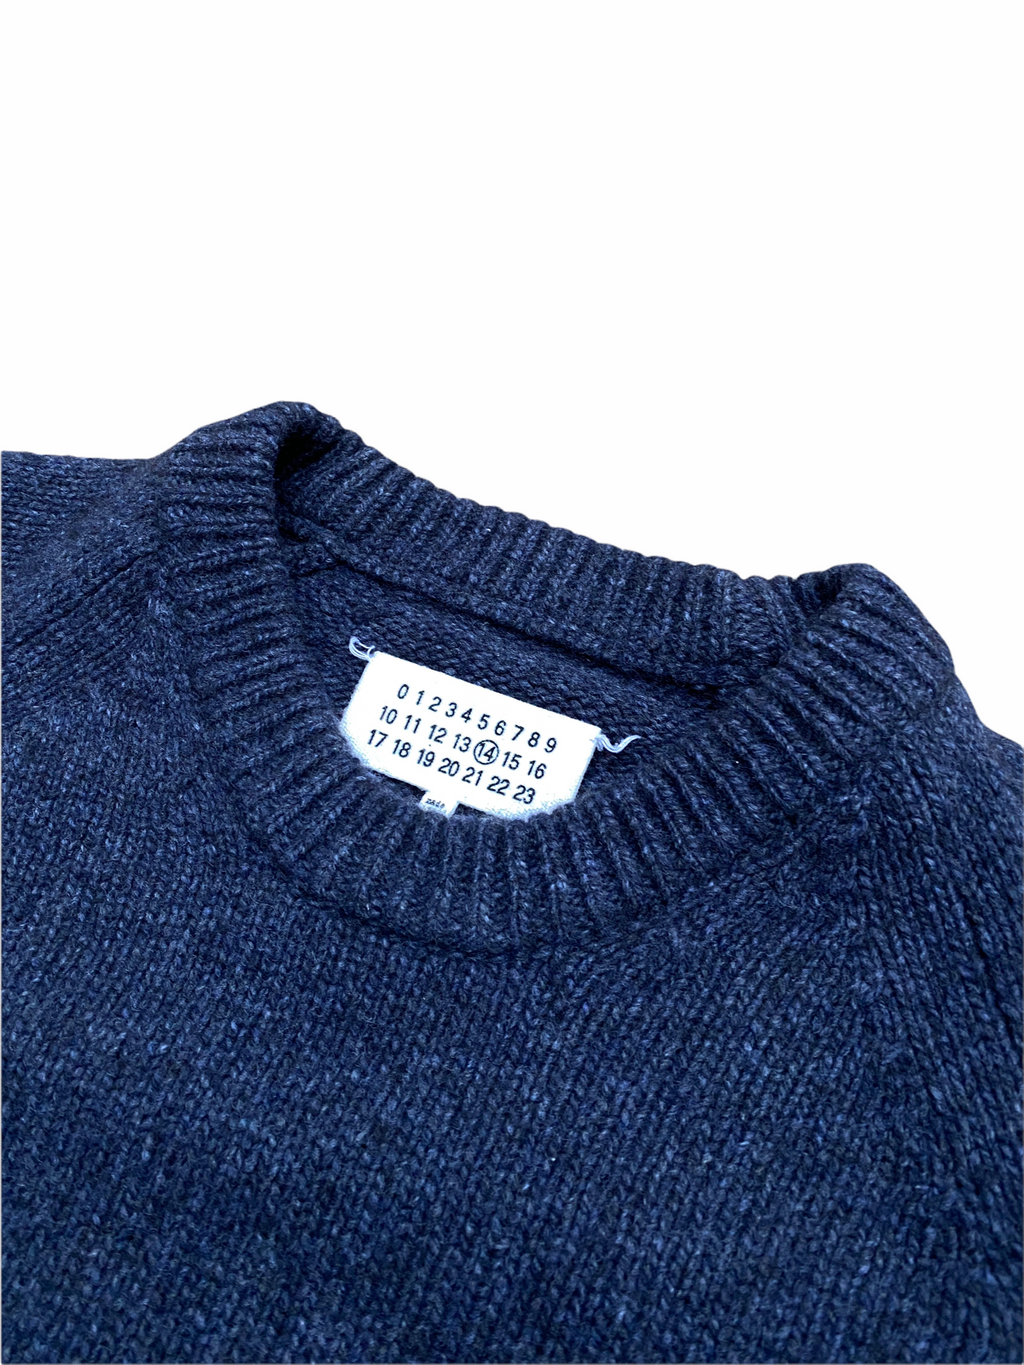 Navy Wool Sweater Size M